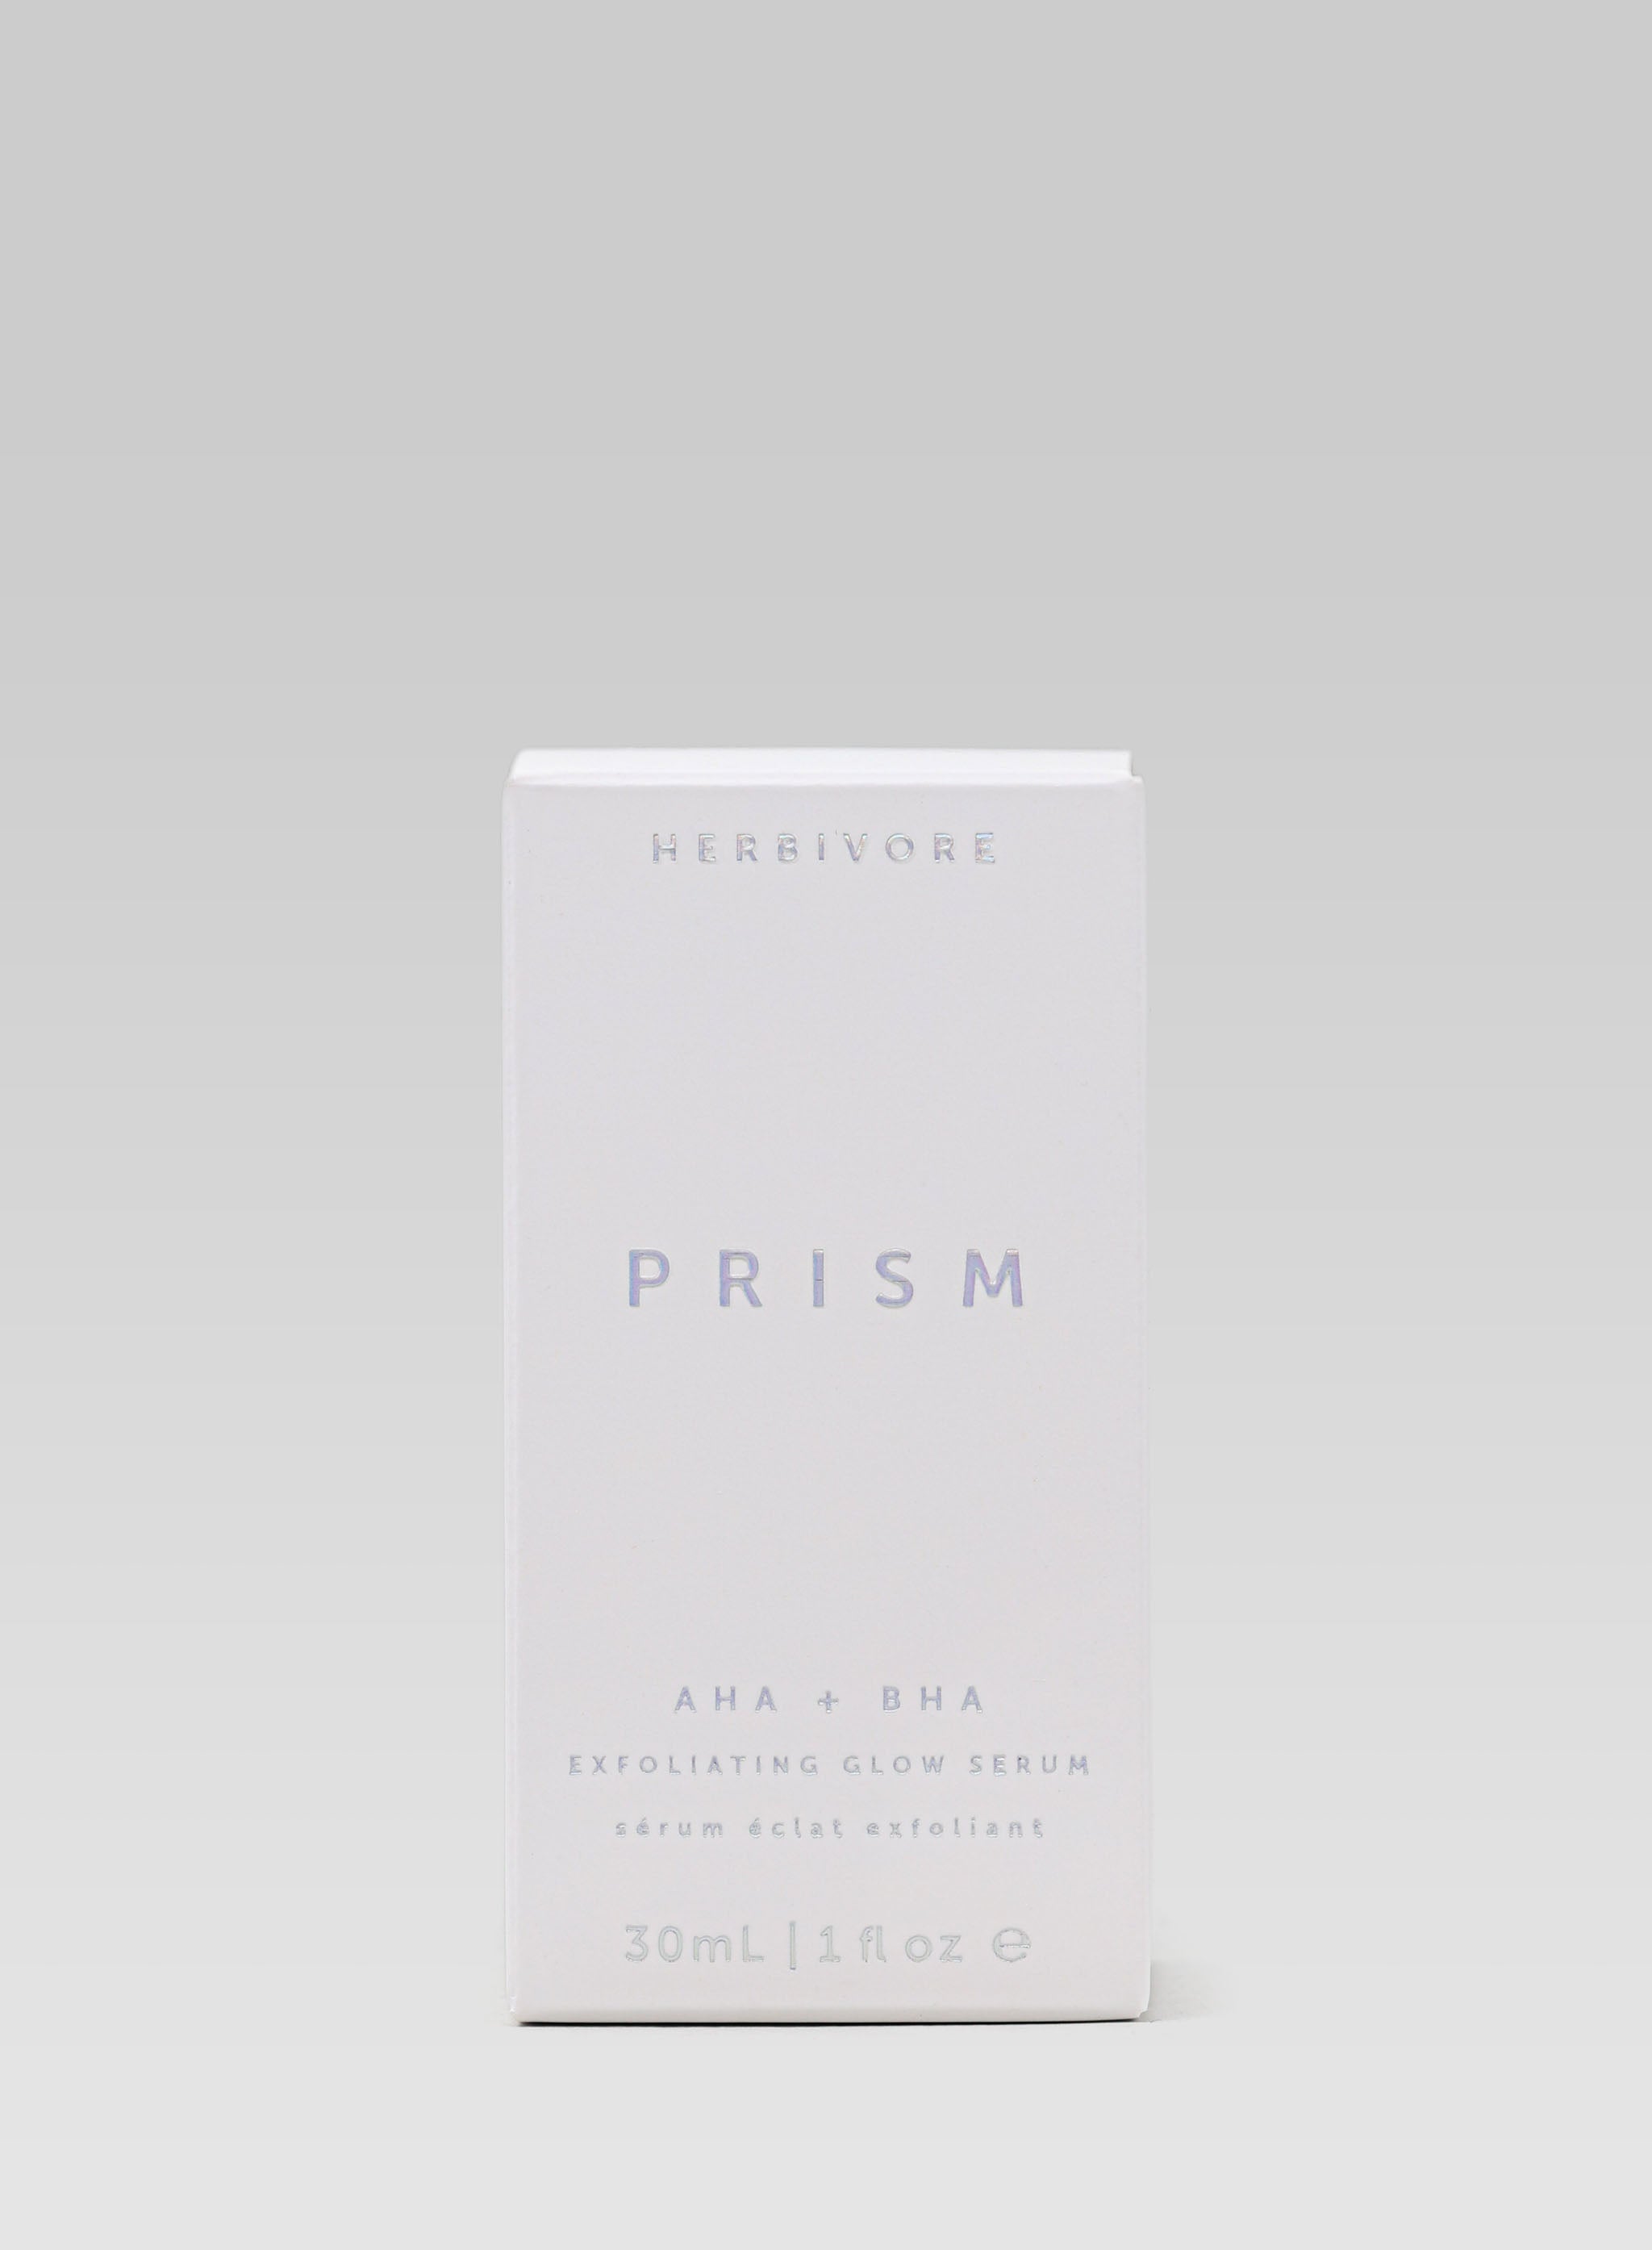 HERBIVORE BOTANICALS Prism AHA and BHA Exfoliating Glow Serum product packaging